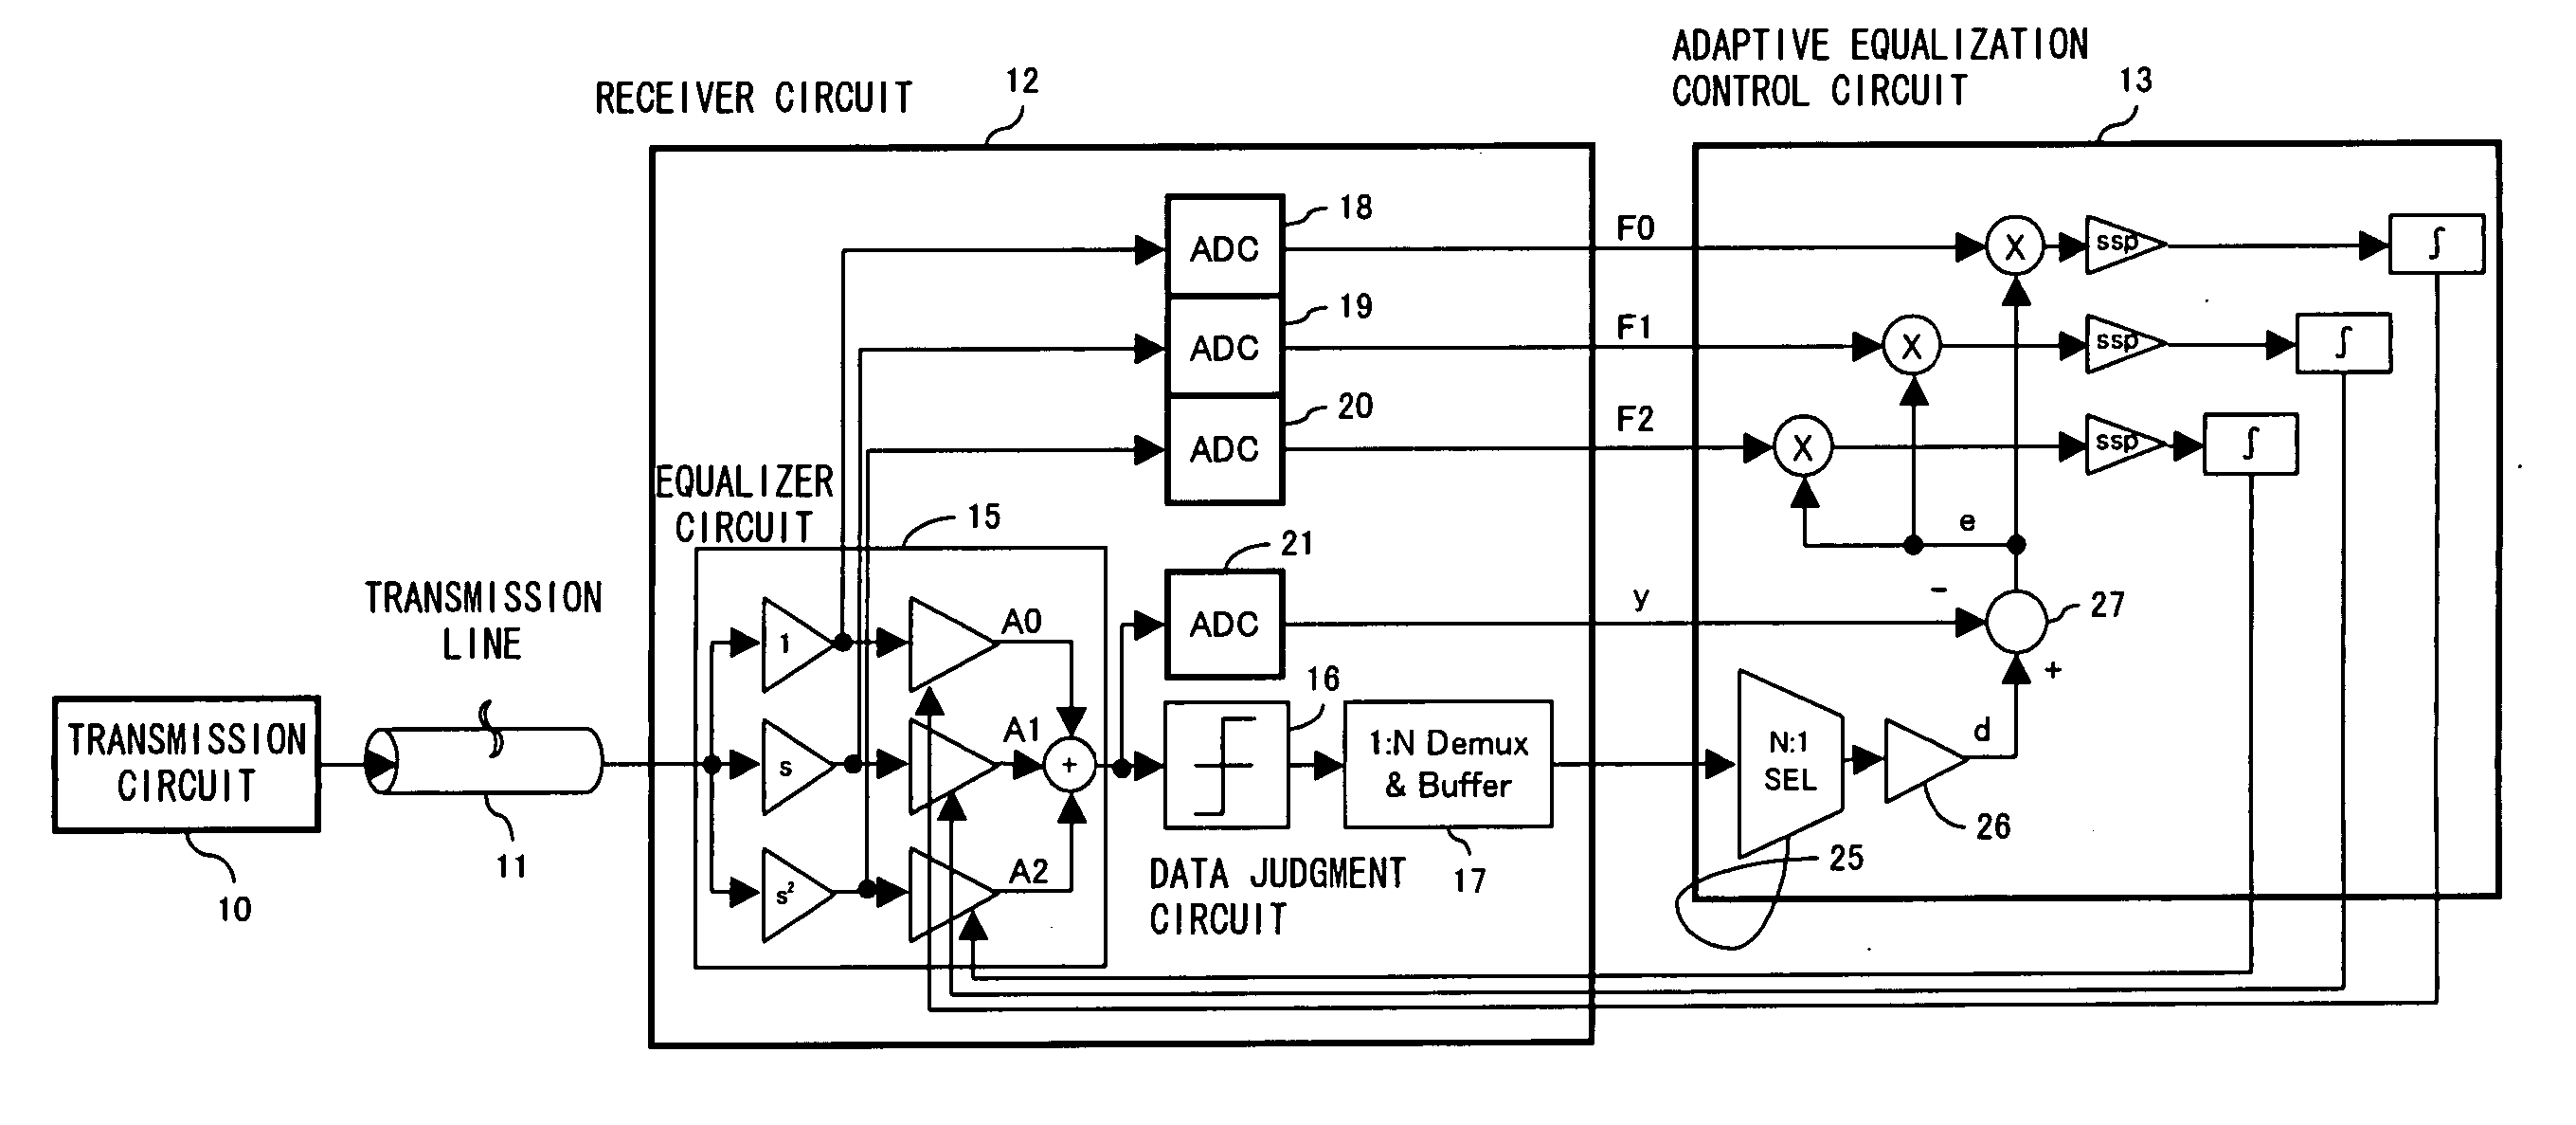 Adaptive equalizer circuit